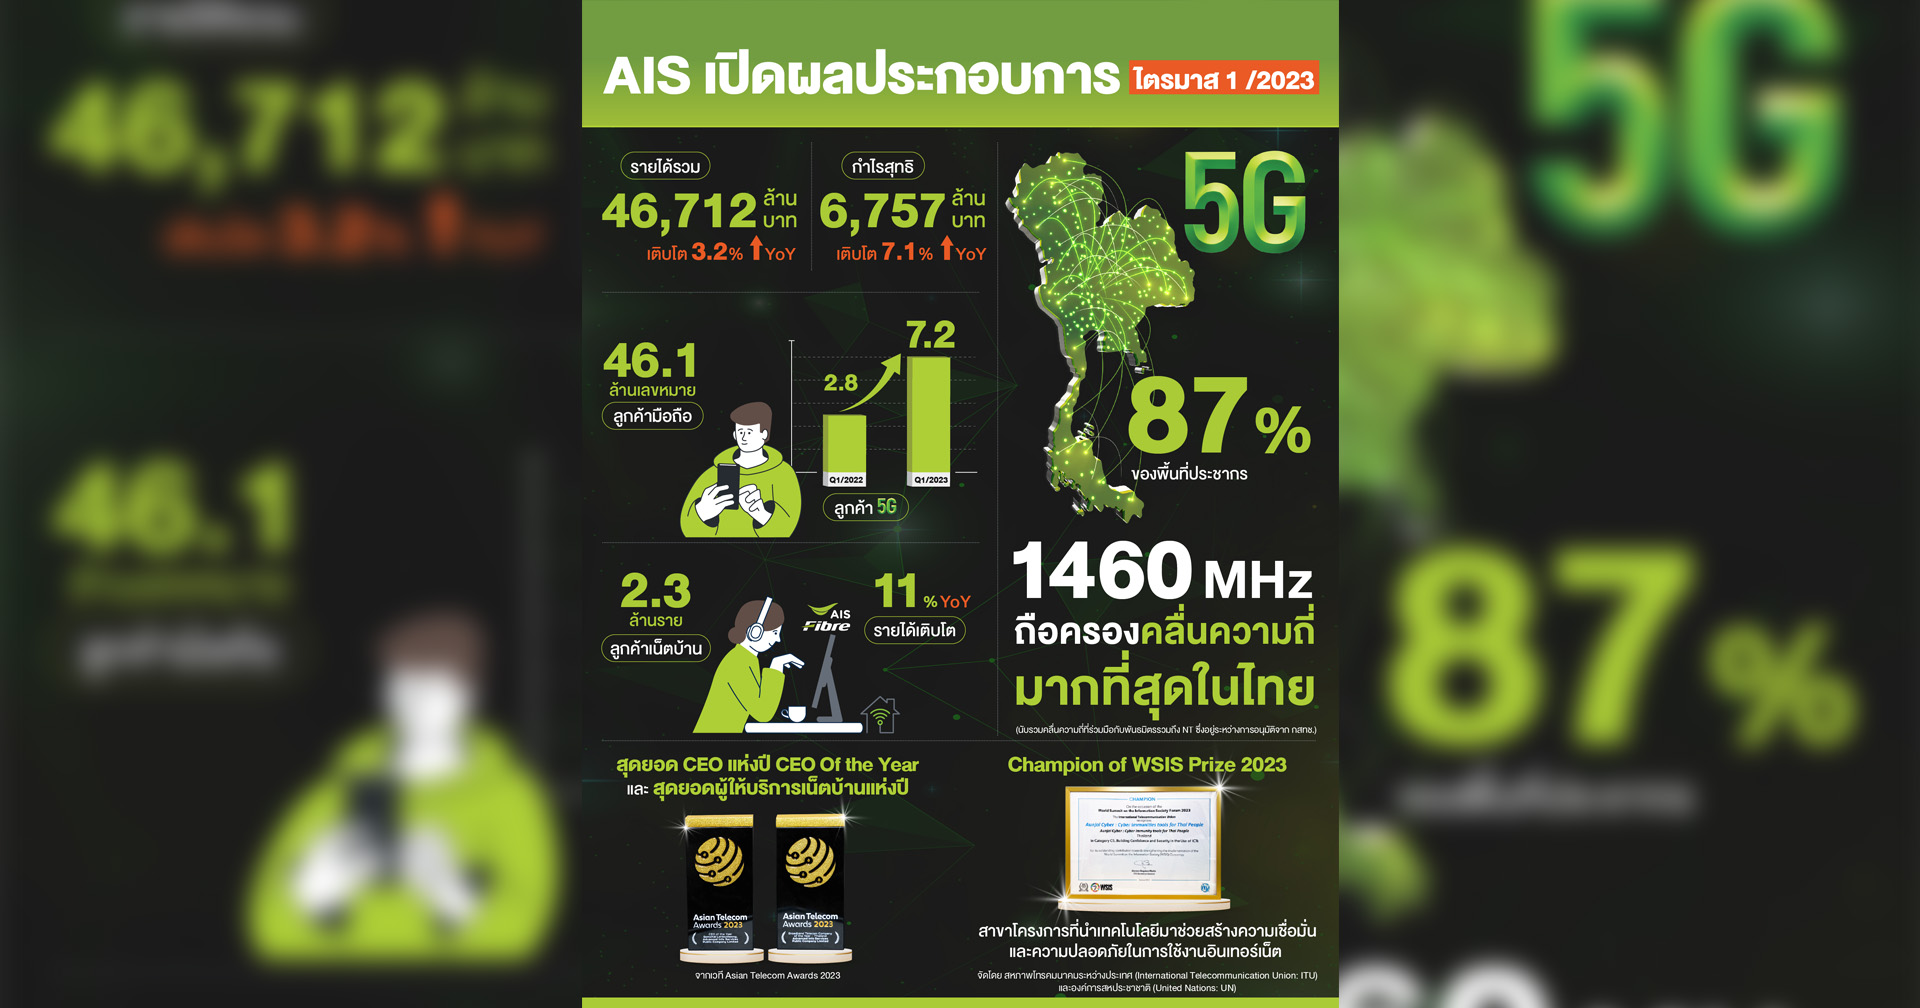 AIS เผยผลประกอบการ กำไรสุทธิไตรมาสแรก 6,757 ล้านบาทโตแกร่ง 7.1%